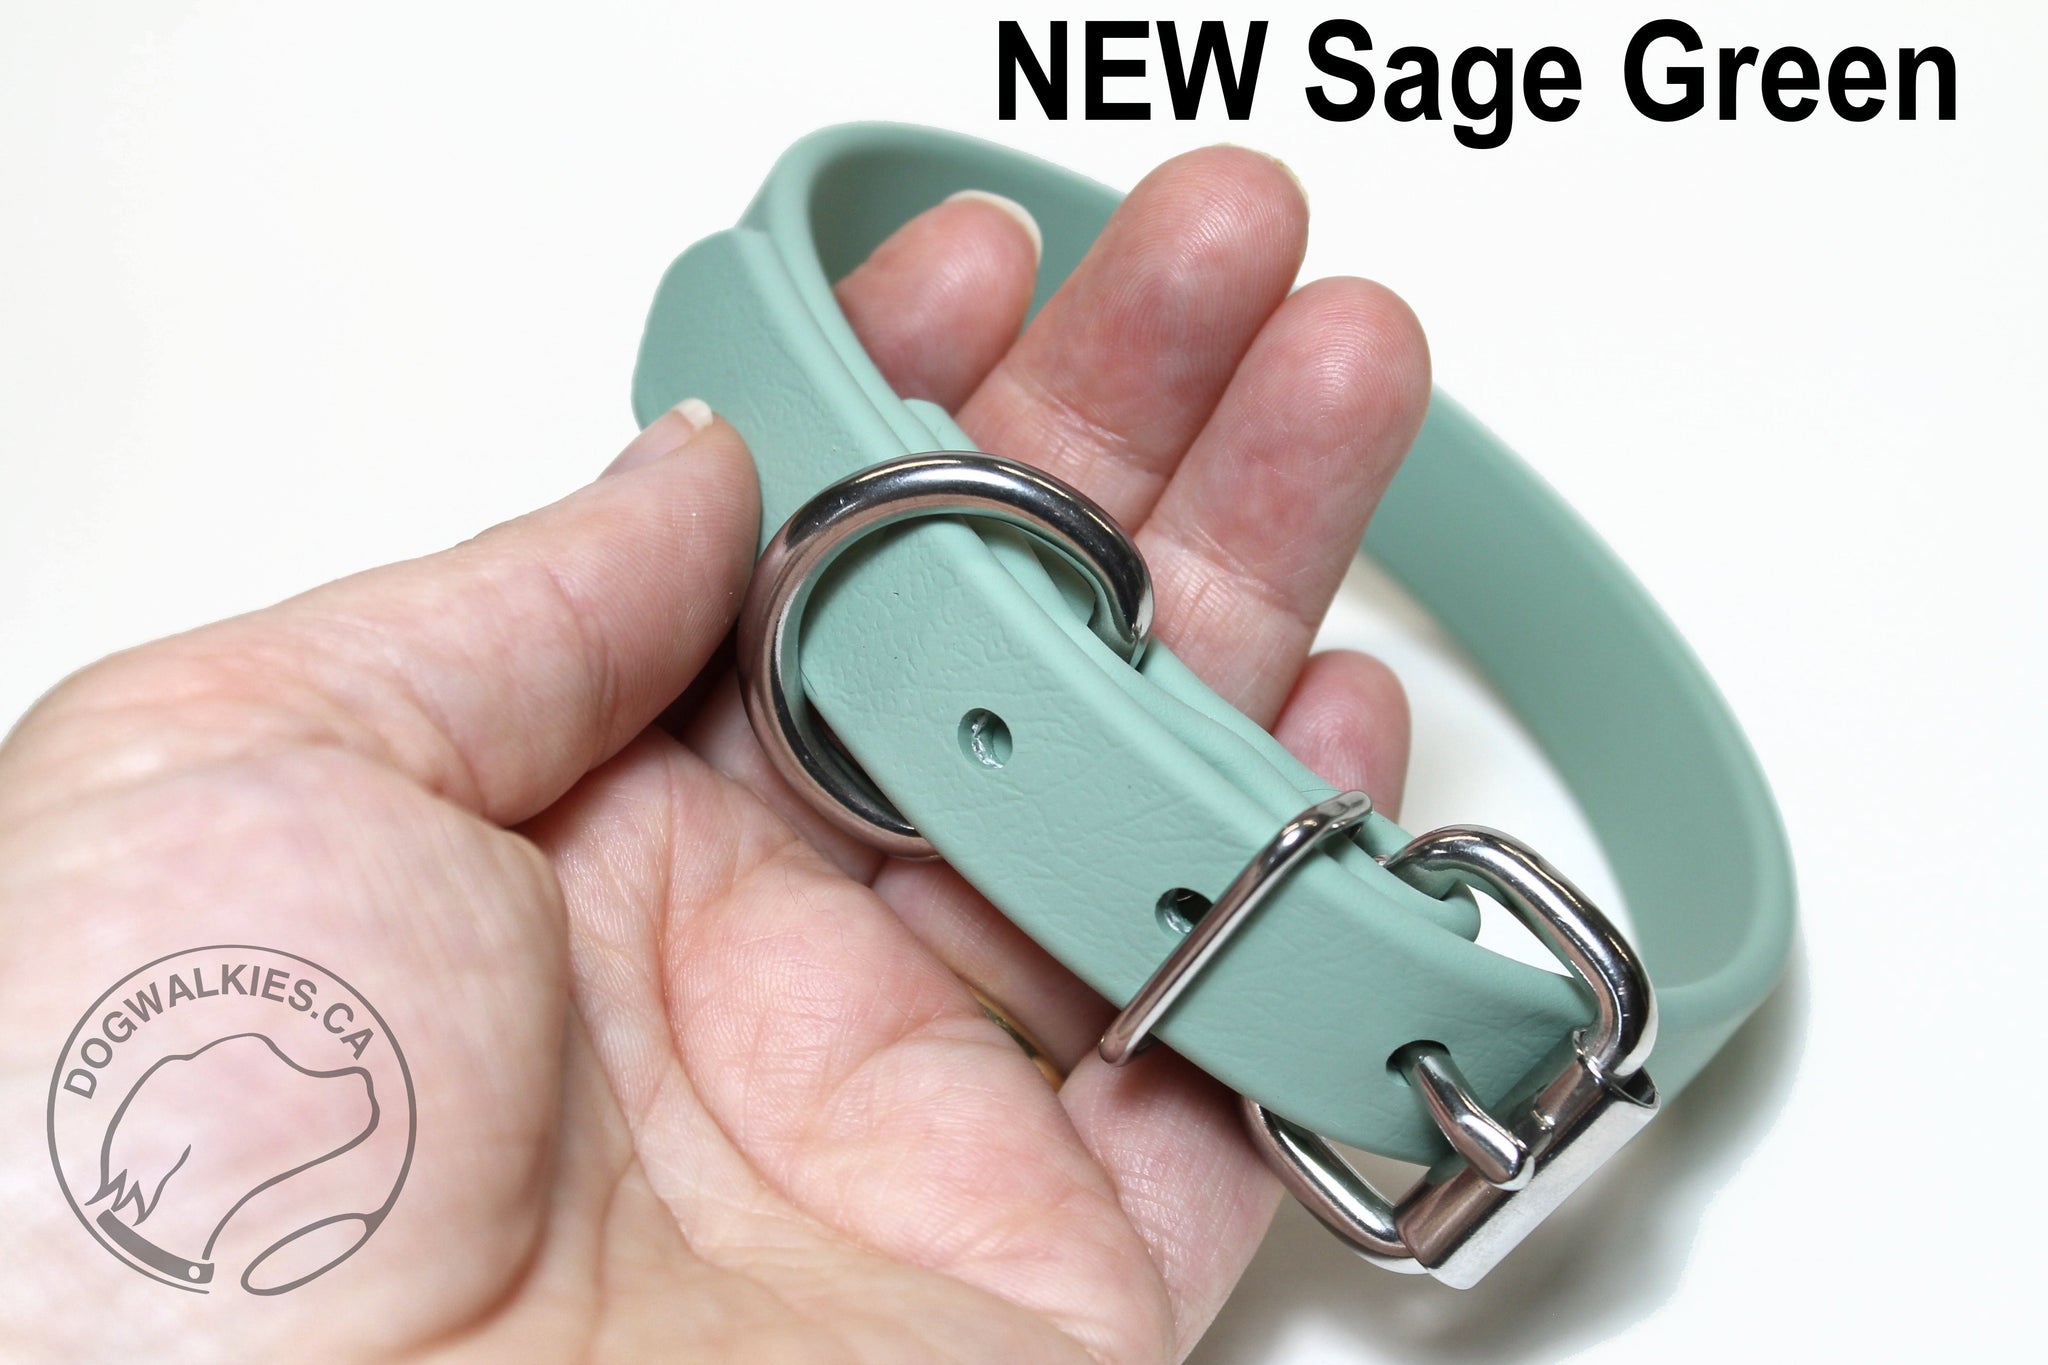 NEW Sage Green Biothane Dog Collar - 3/4" (20mm) wide